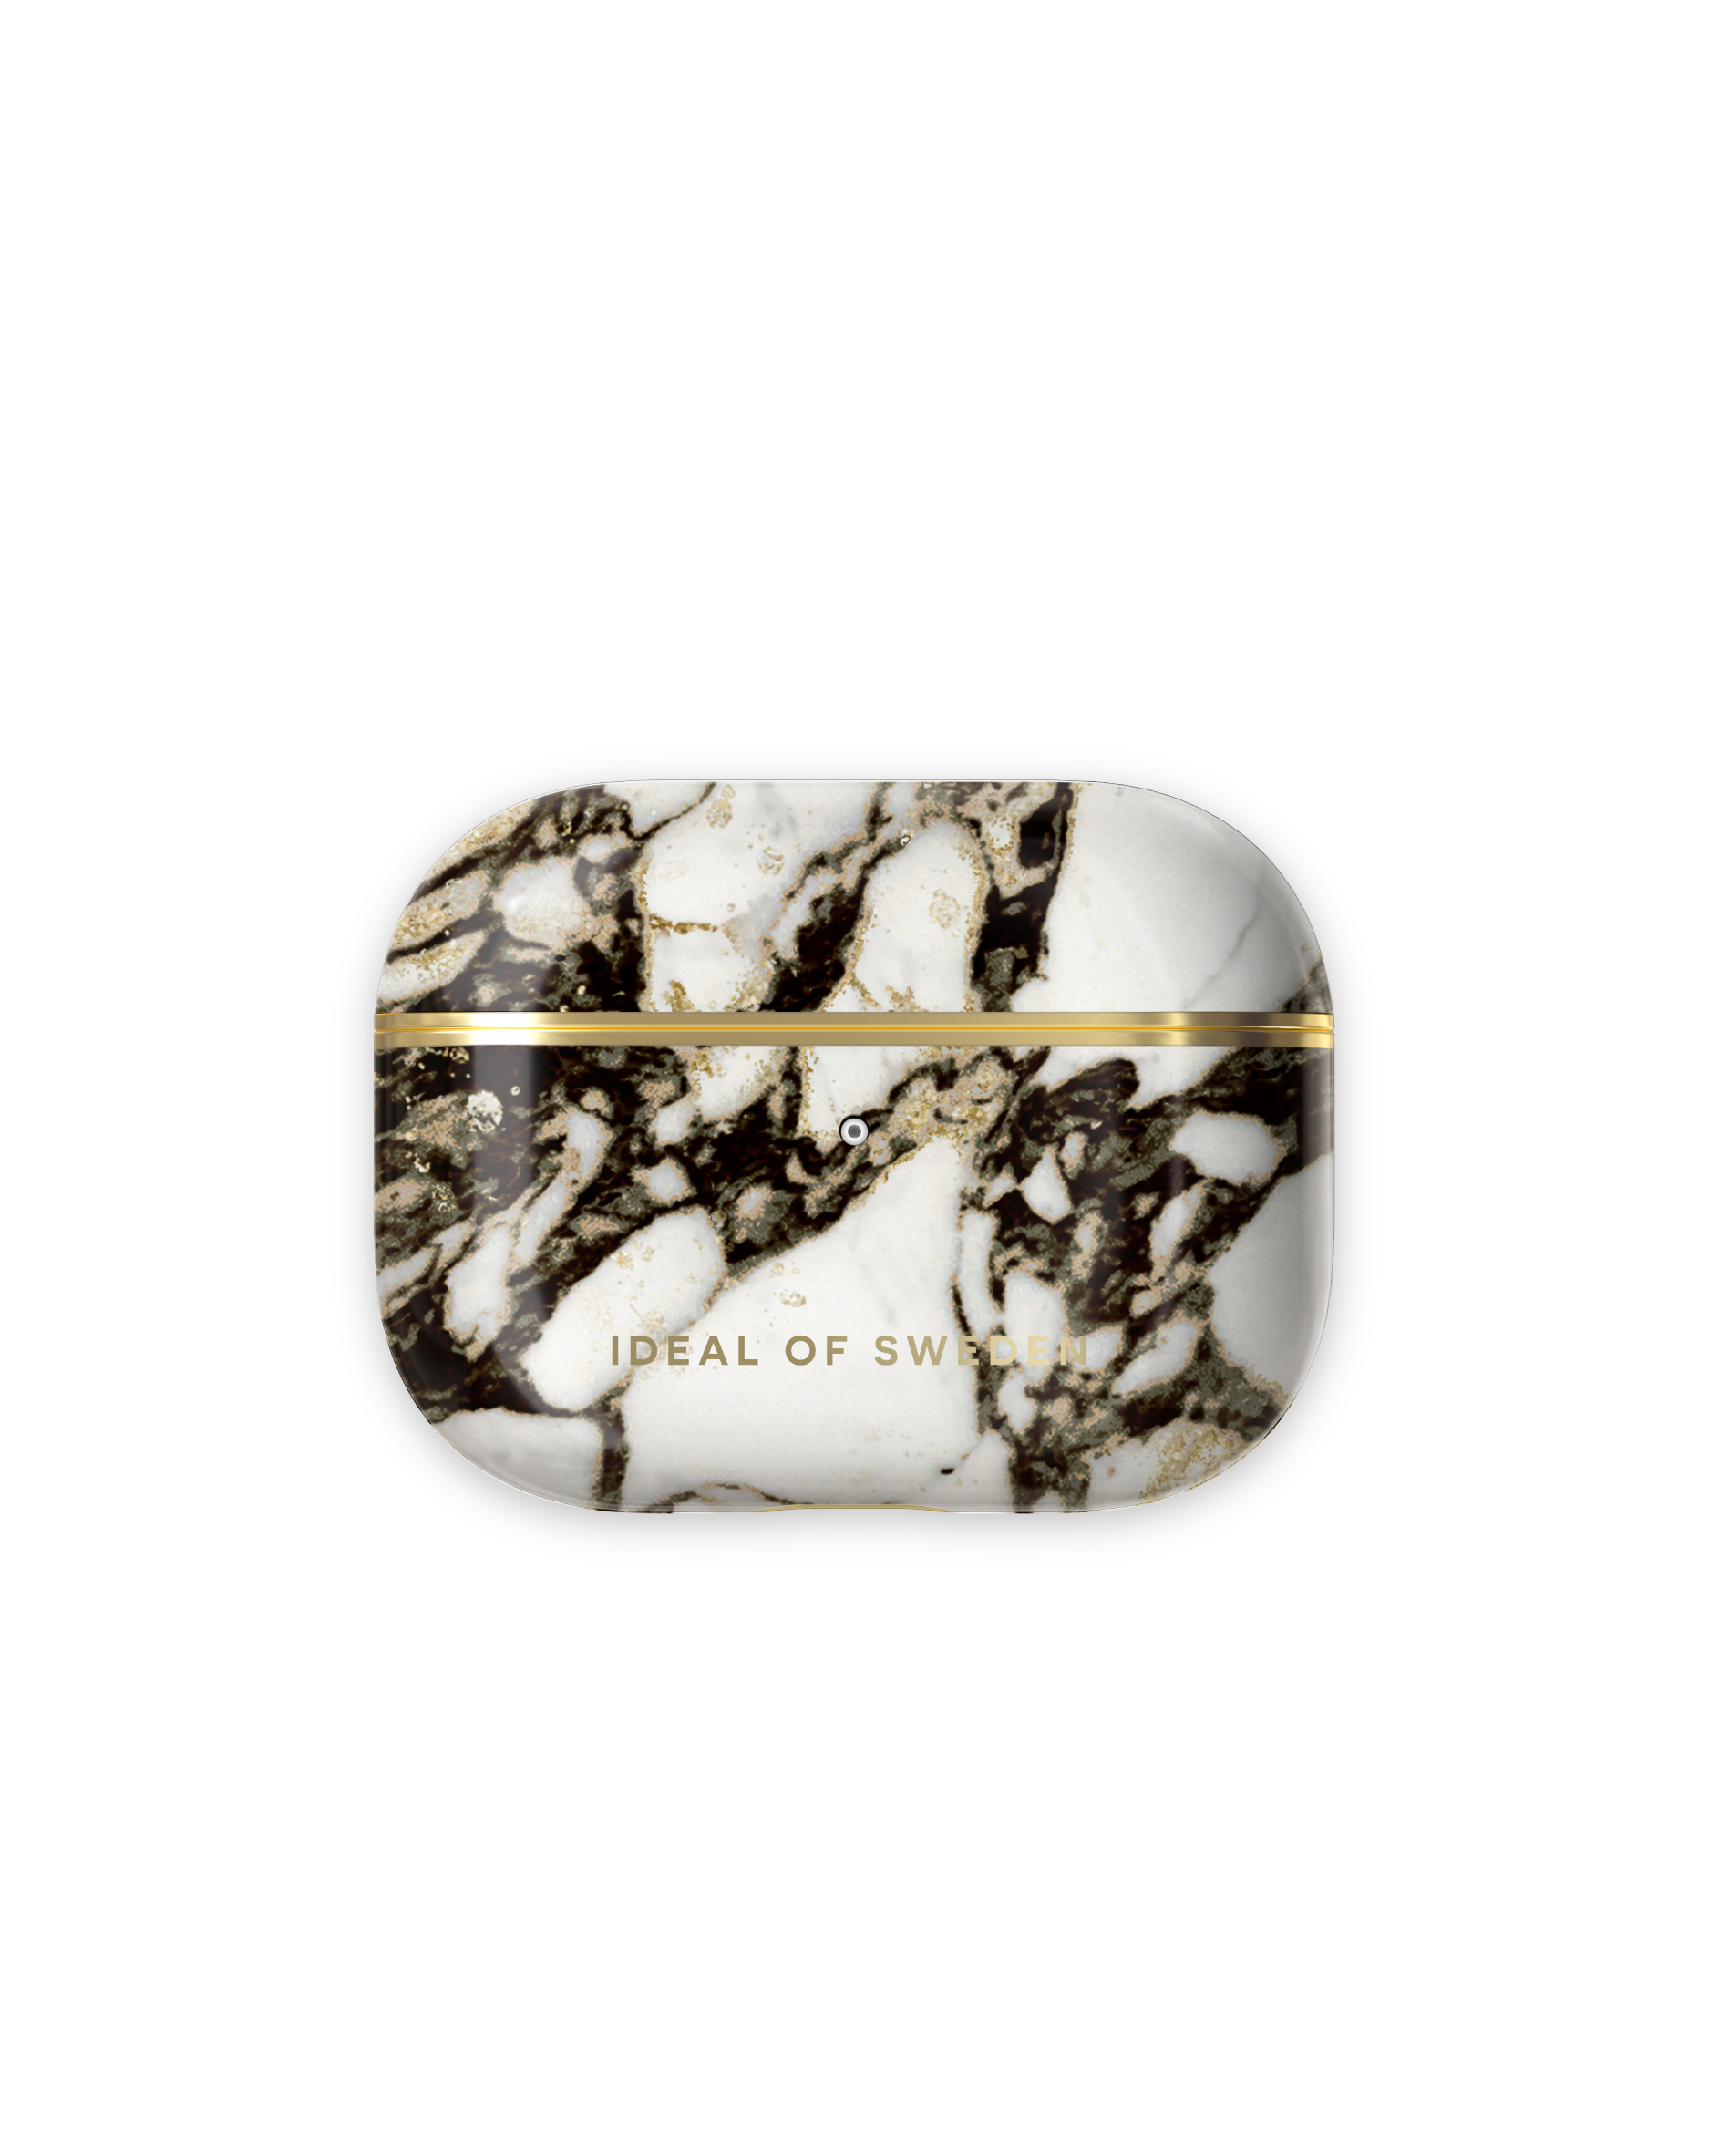 SWEDEN Calacatta für: Apple passend AirPod Cover OF IDFAPCMR21-PRO-380 IDEAL Case Golden Marble Full